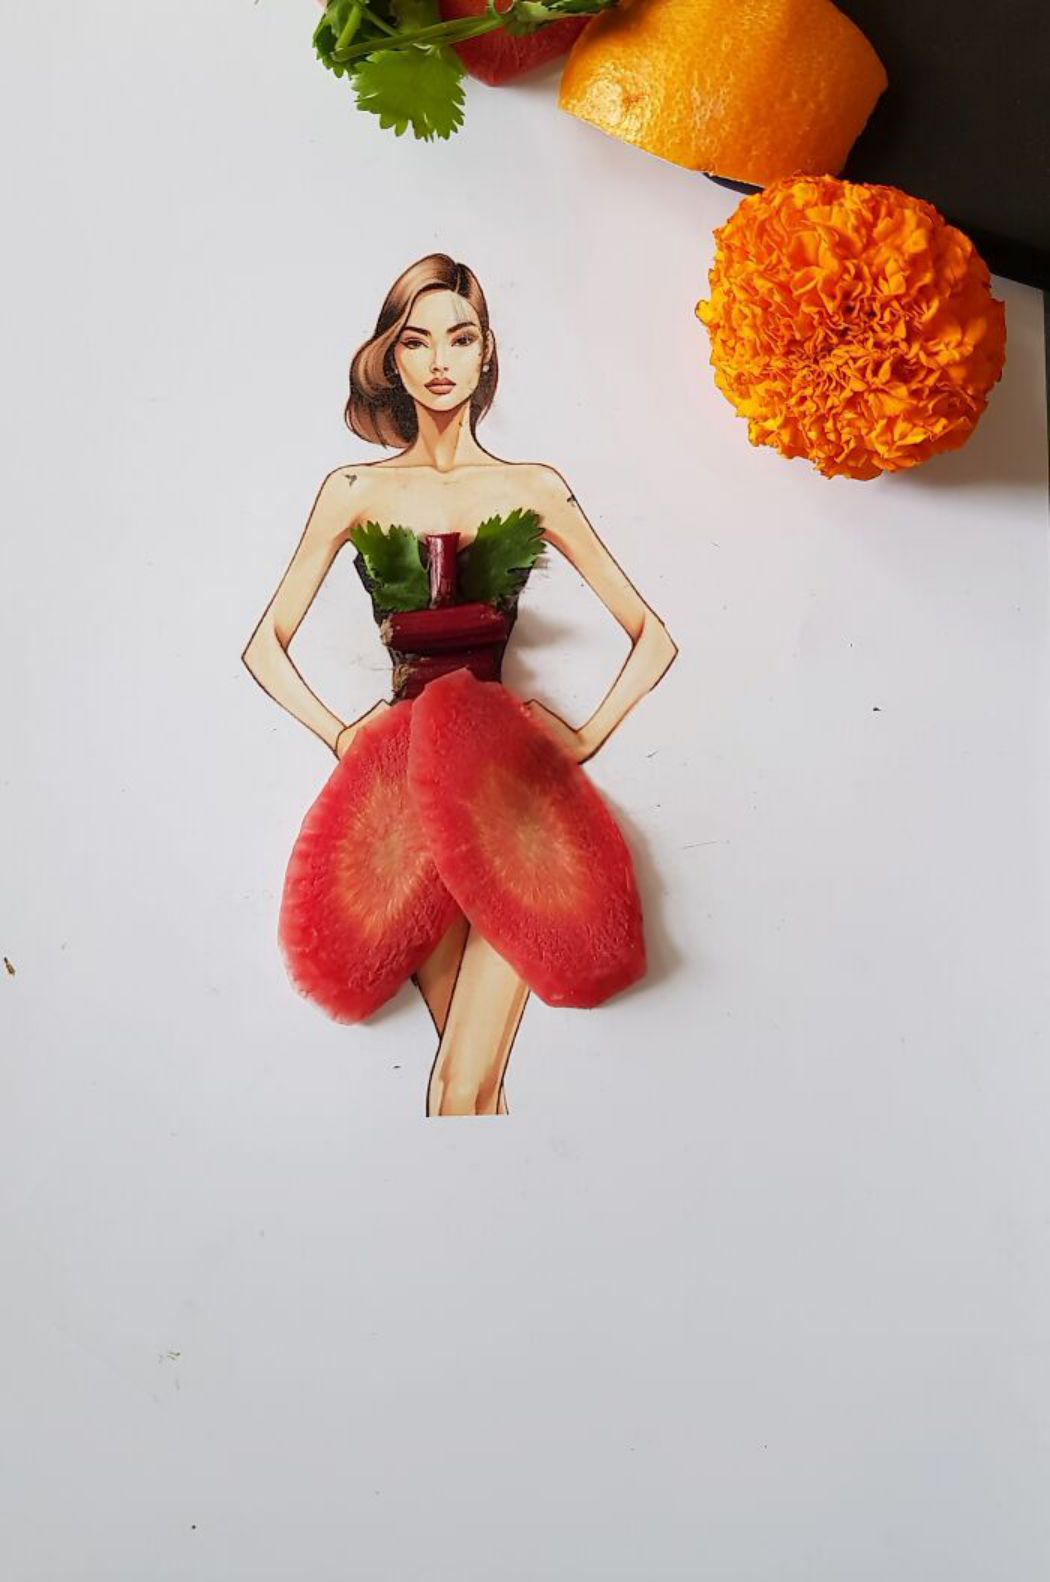 Digital Artist Monika Creates Unique Dresses Using Pulses, Fruit, And Vegetables (2)